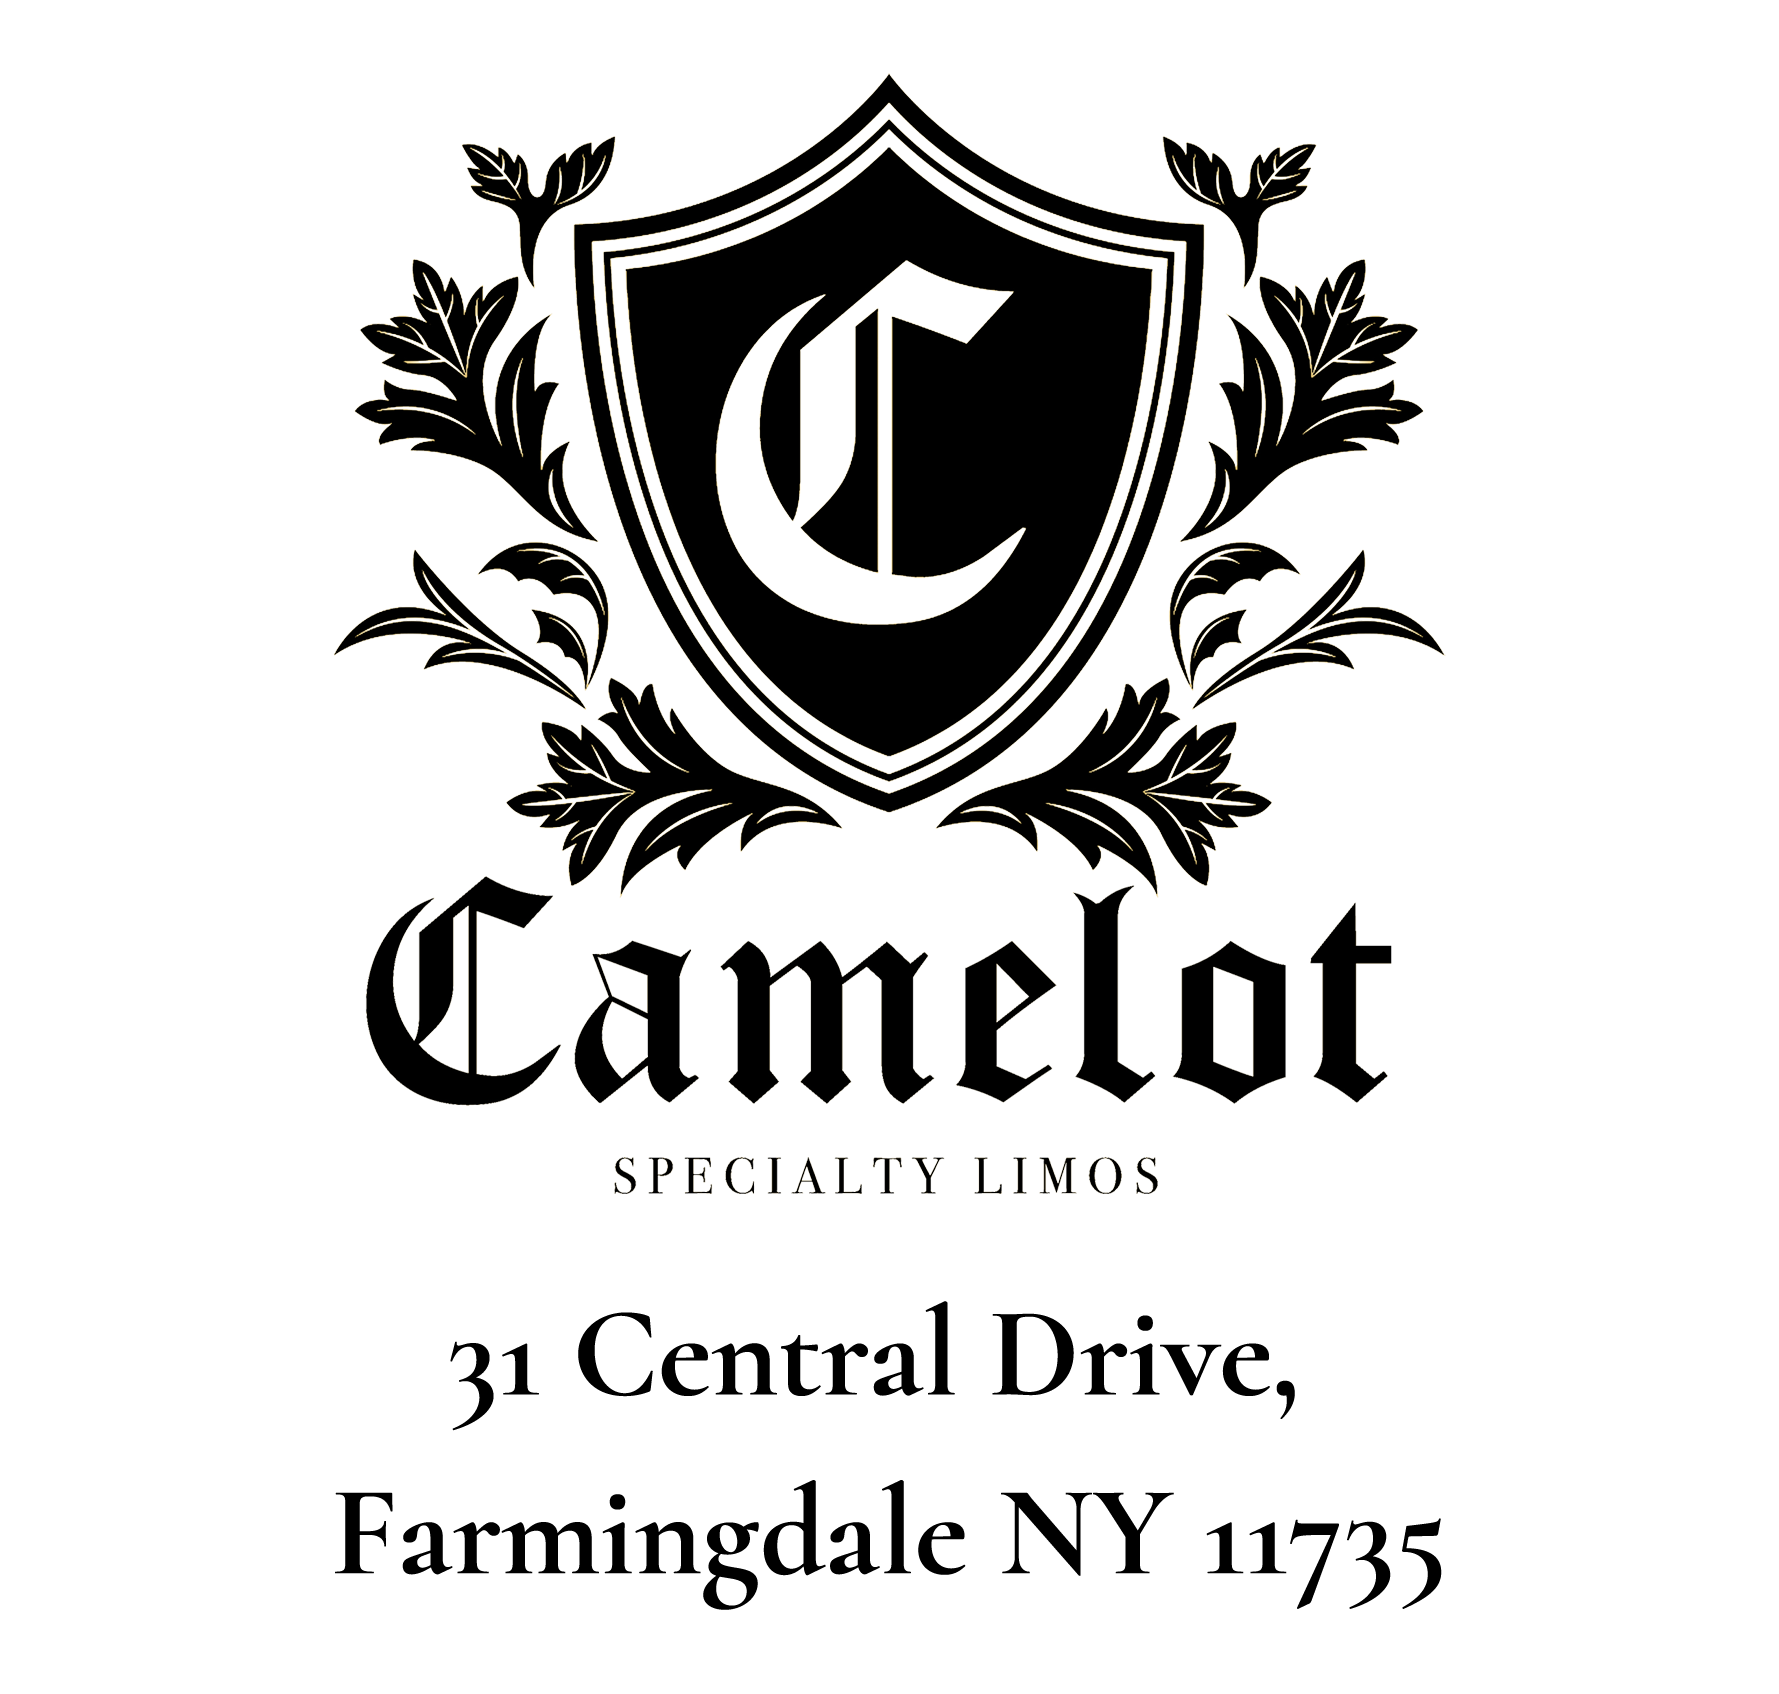 Camelot Specialty Limos, Inc. Logo